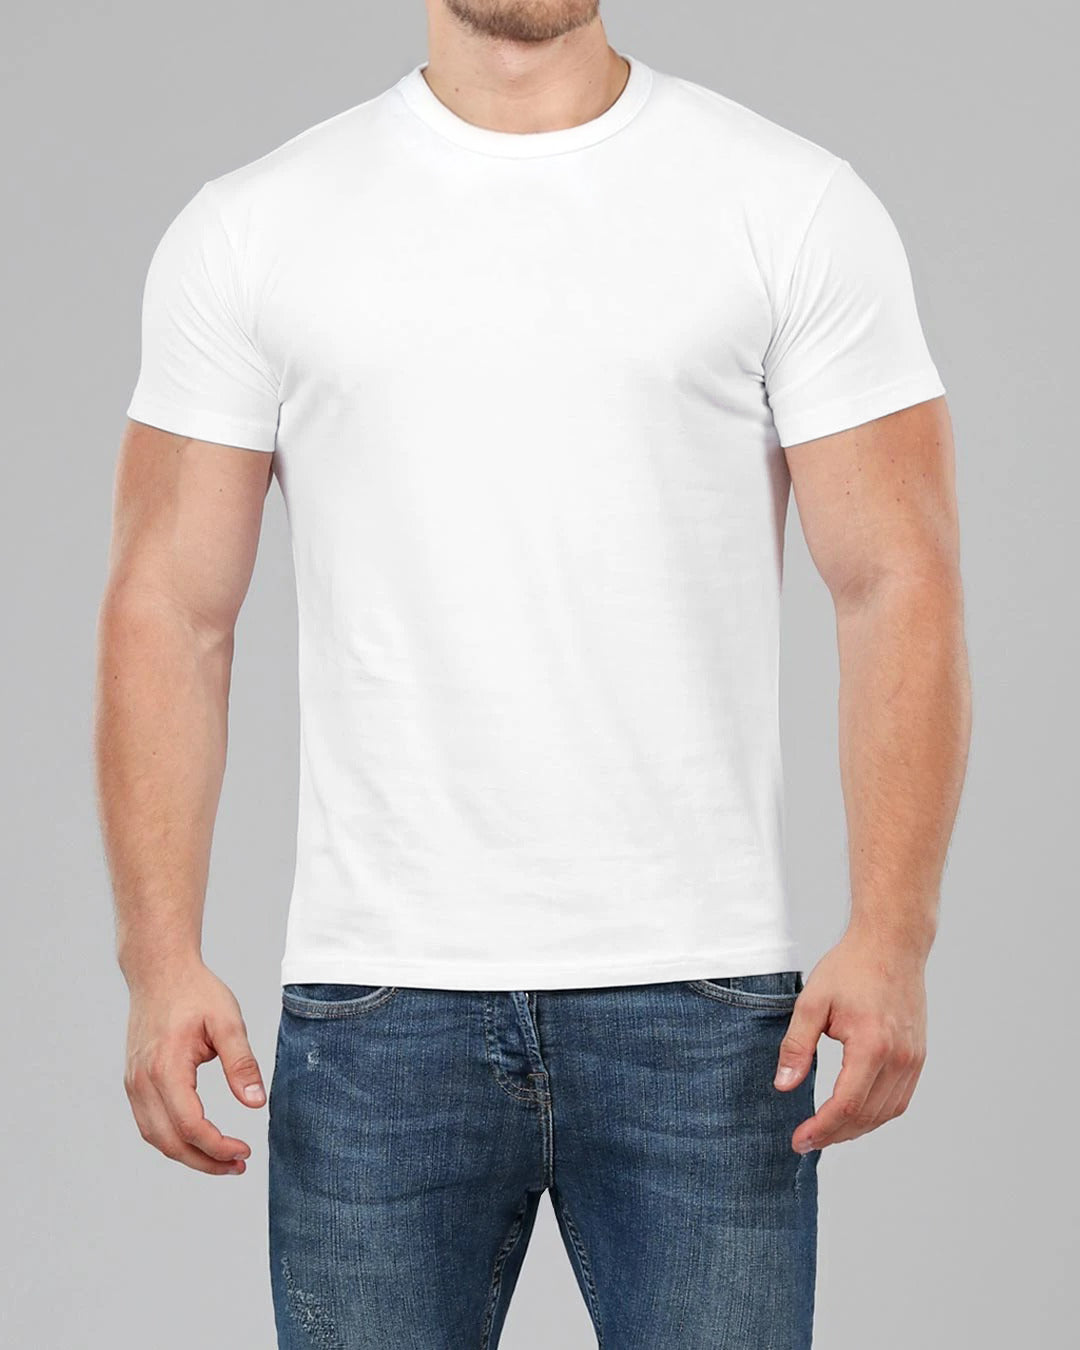 Envision ekspertise ligevægt Men's White Crew Neck Fitted Plain T-Shirt | Muscle Fit Basics